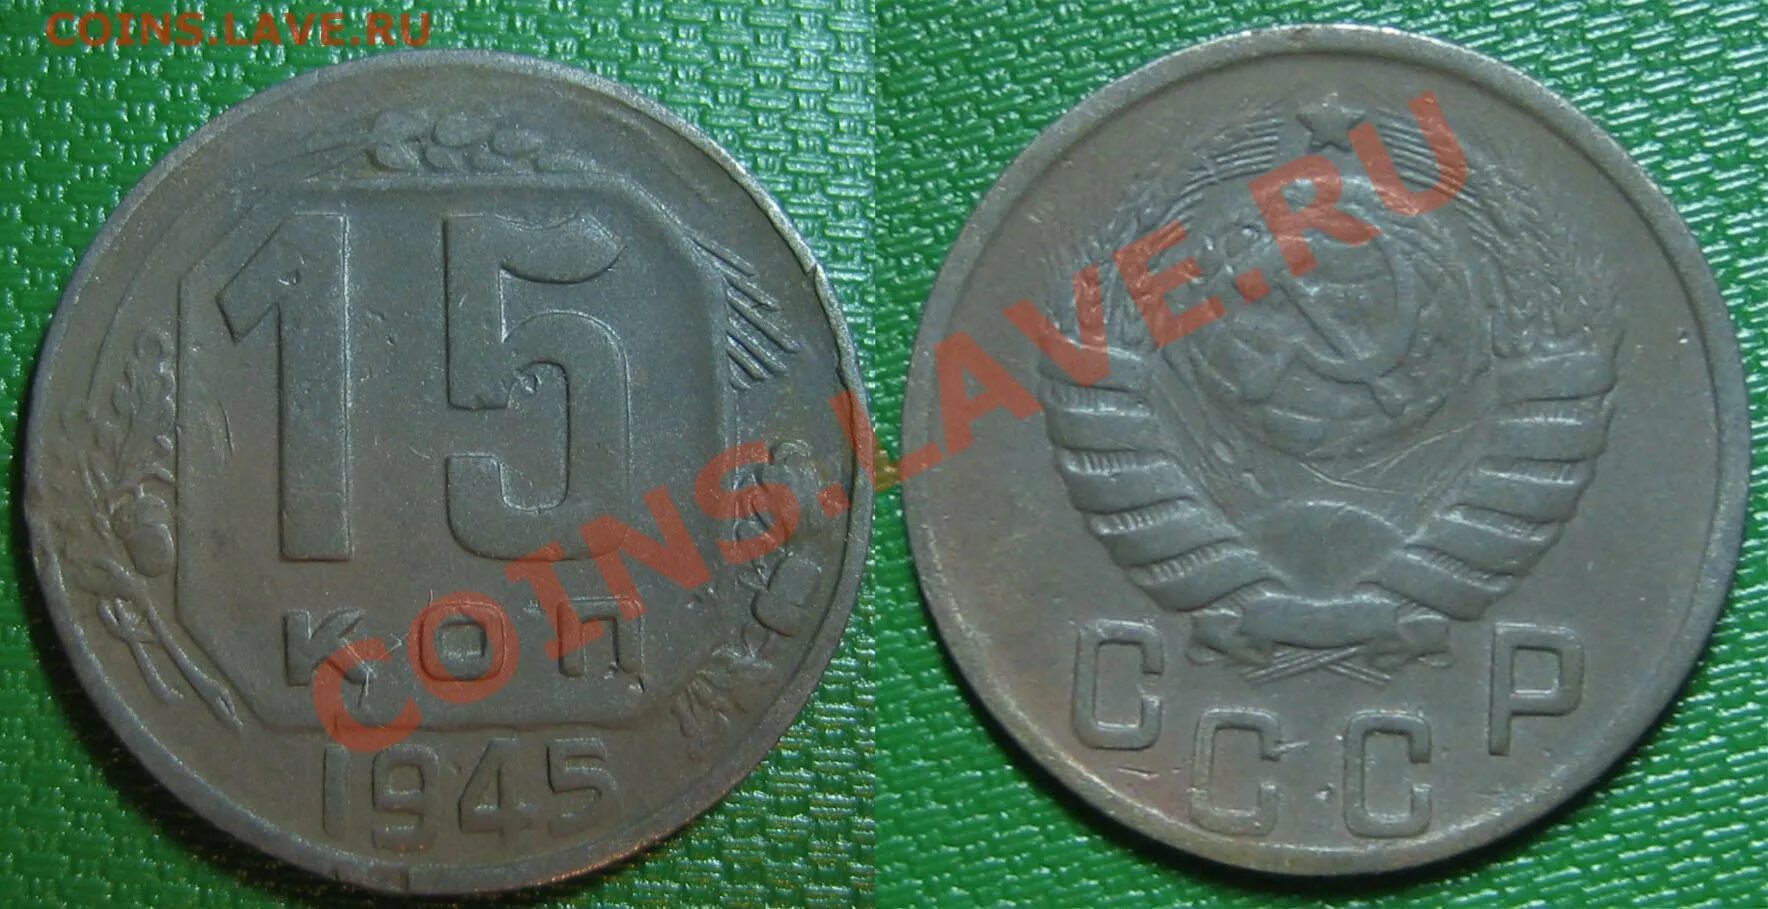 15 Коп 1945. 15 Копеек 1945. Монета 15 копеек 1945 года. 15 Копеек 1945 фото. 5 рублей 1945